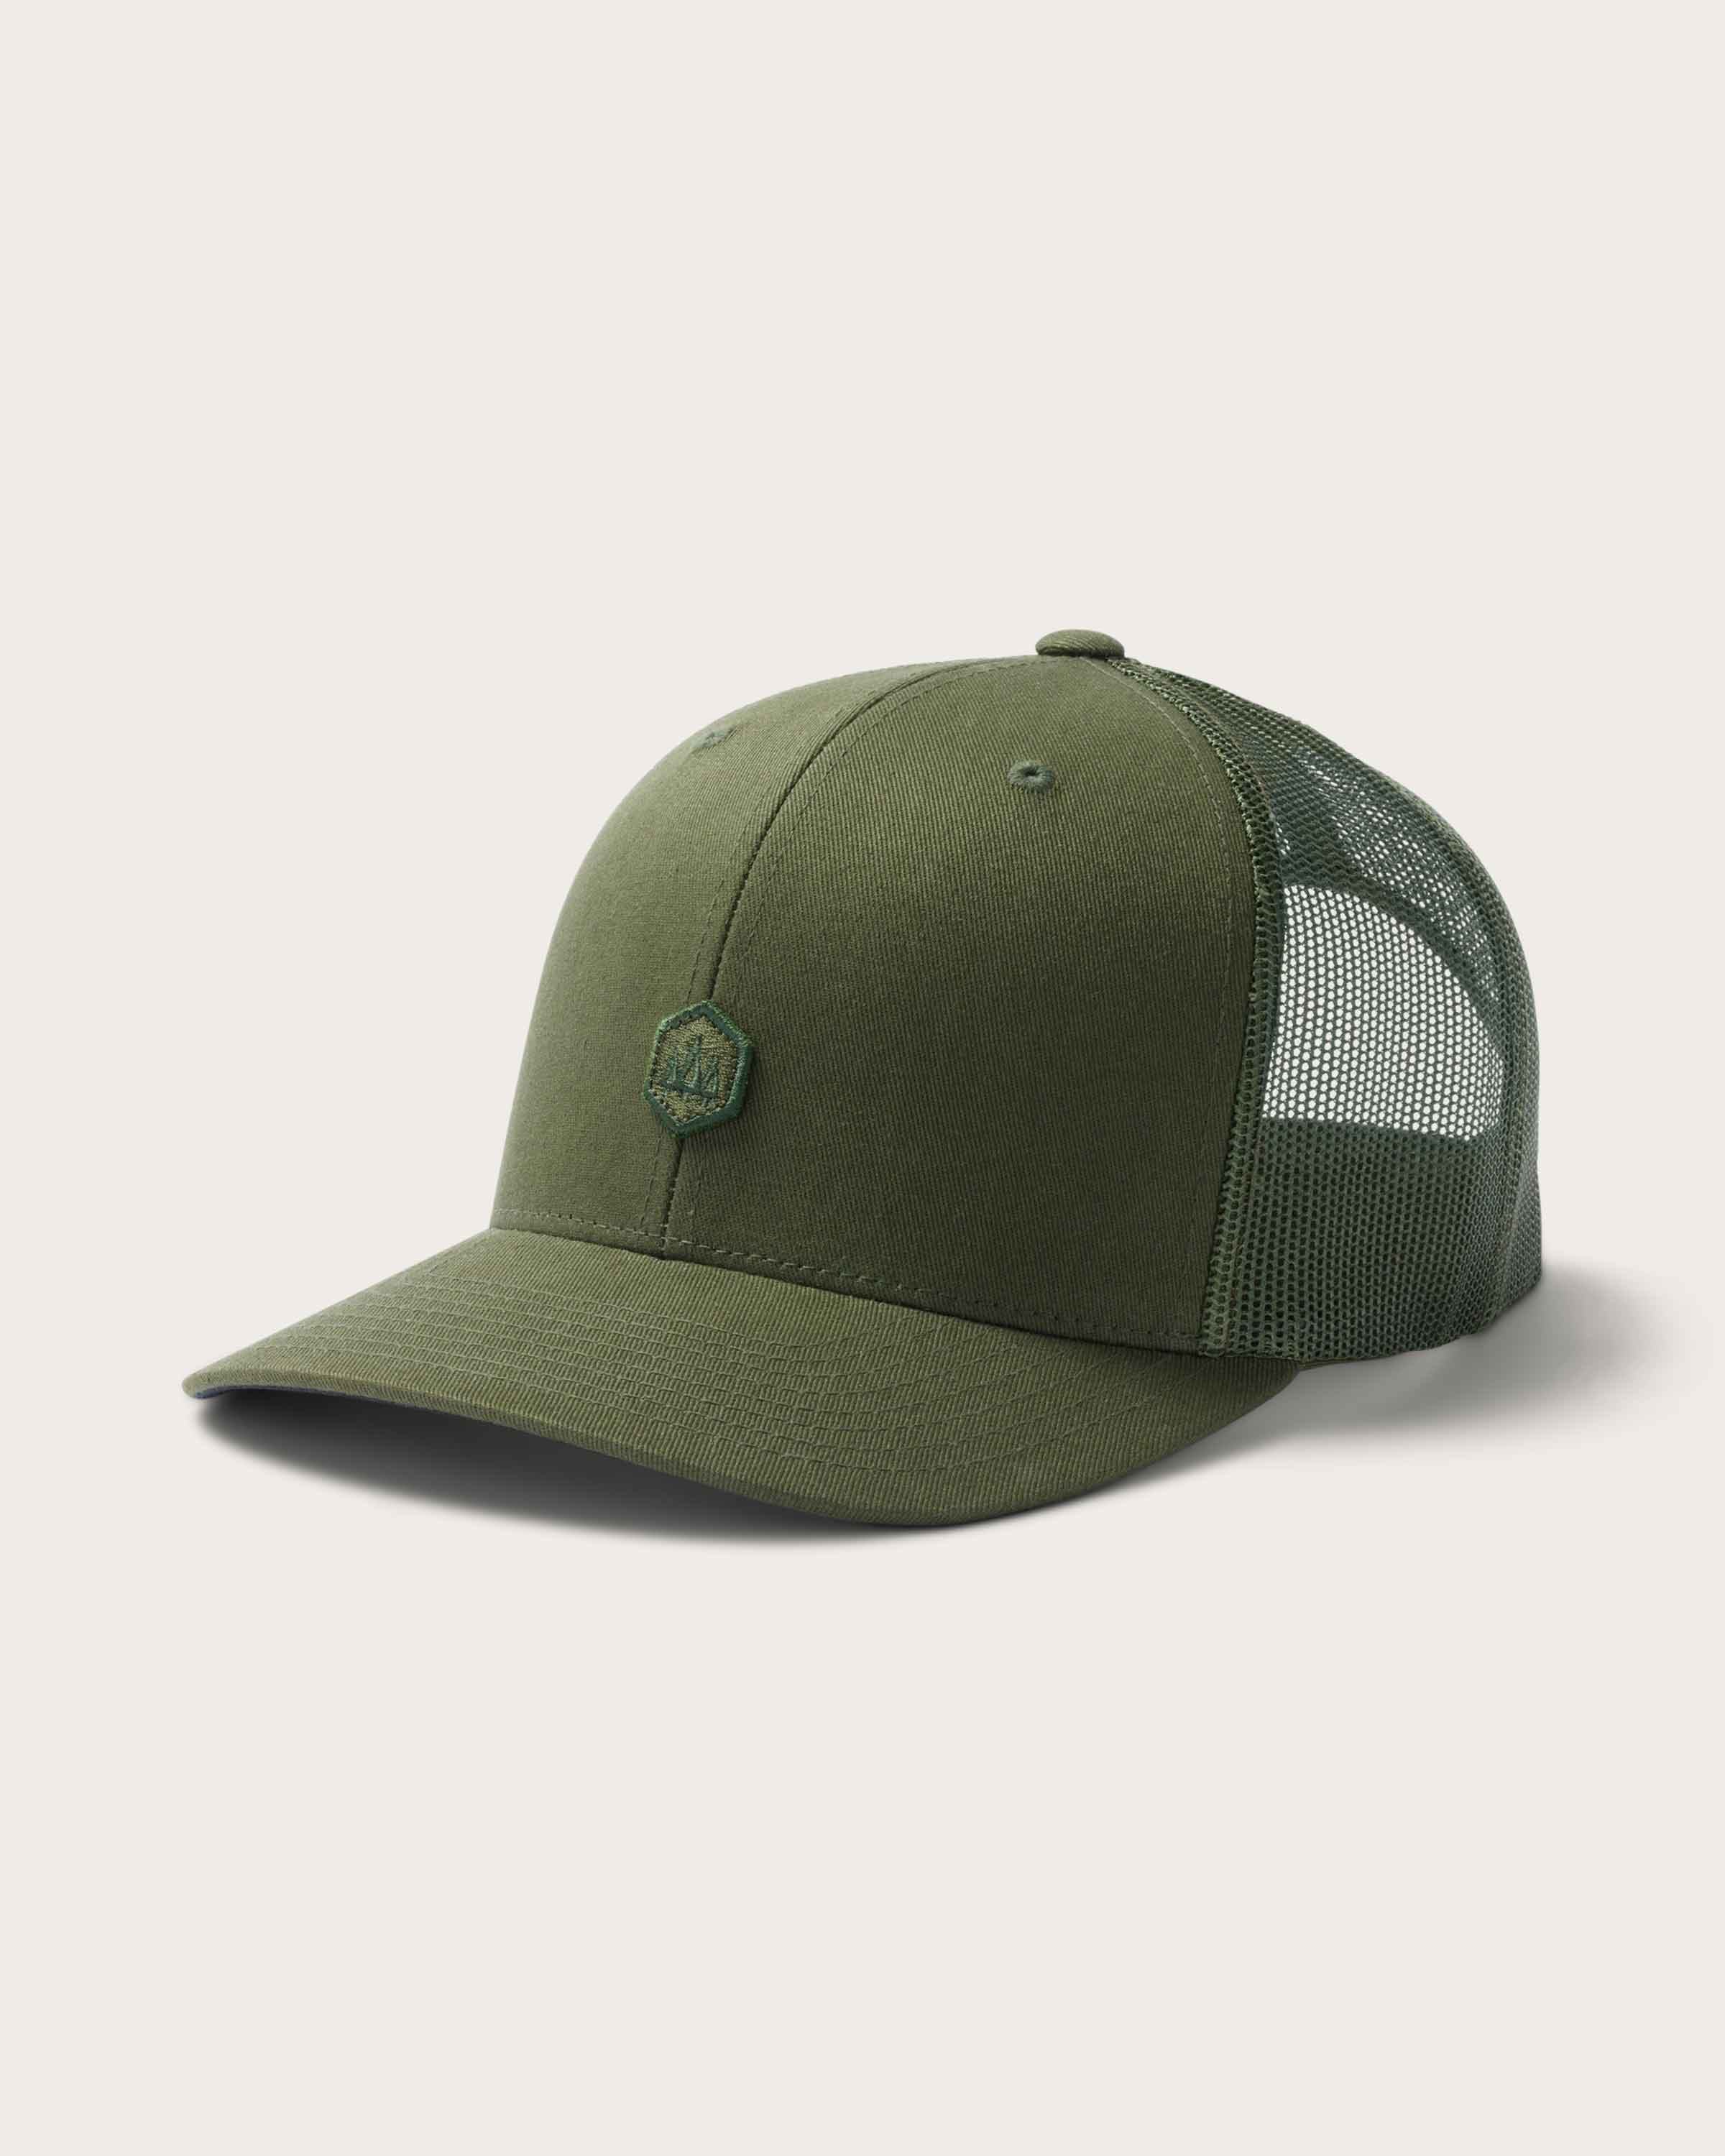 Cooper Trucker Hat in Olive - undefined - Hemlock Hat Co. Ball Caps